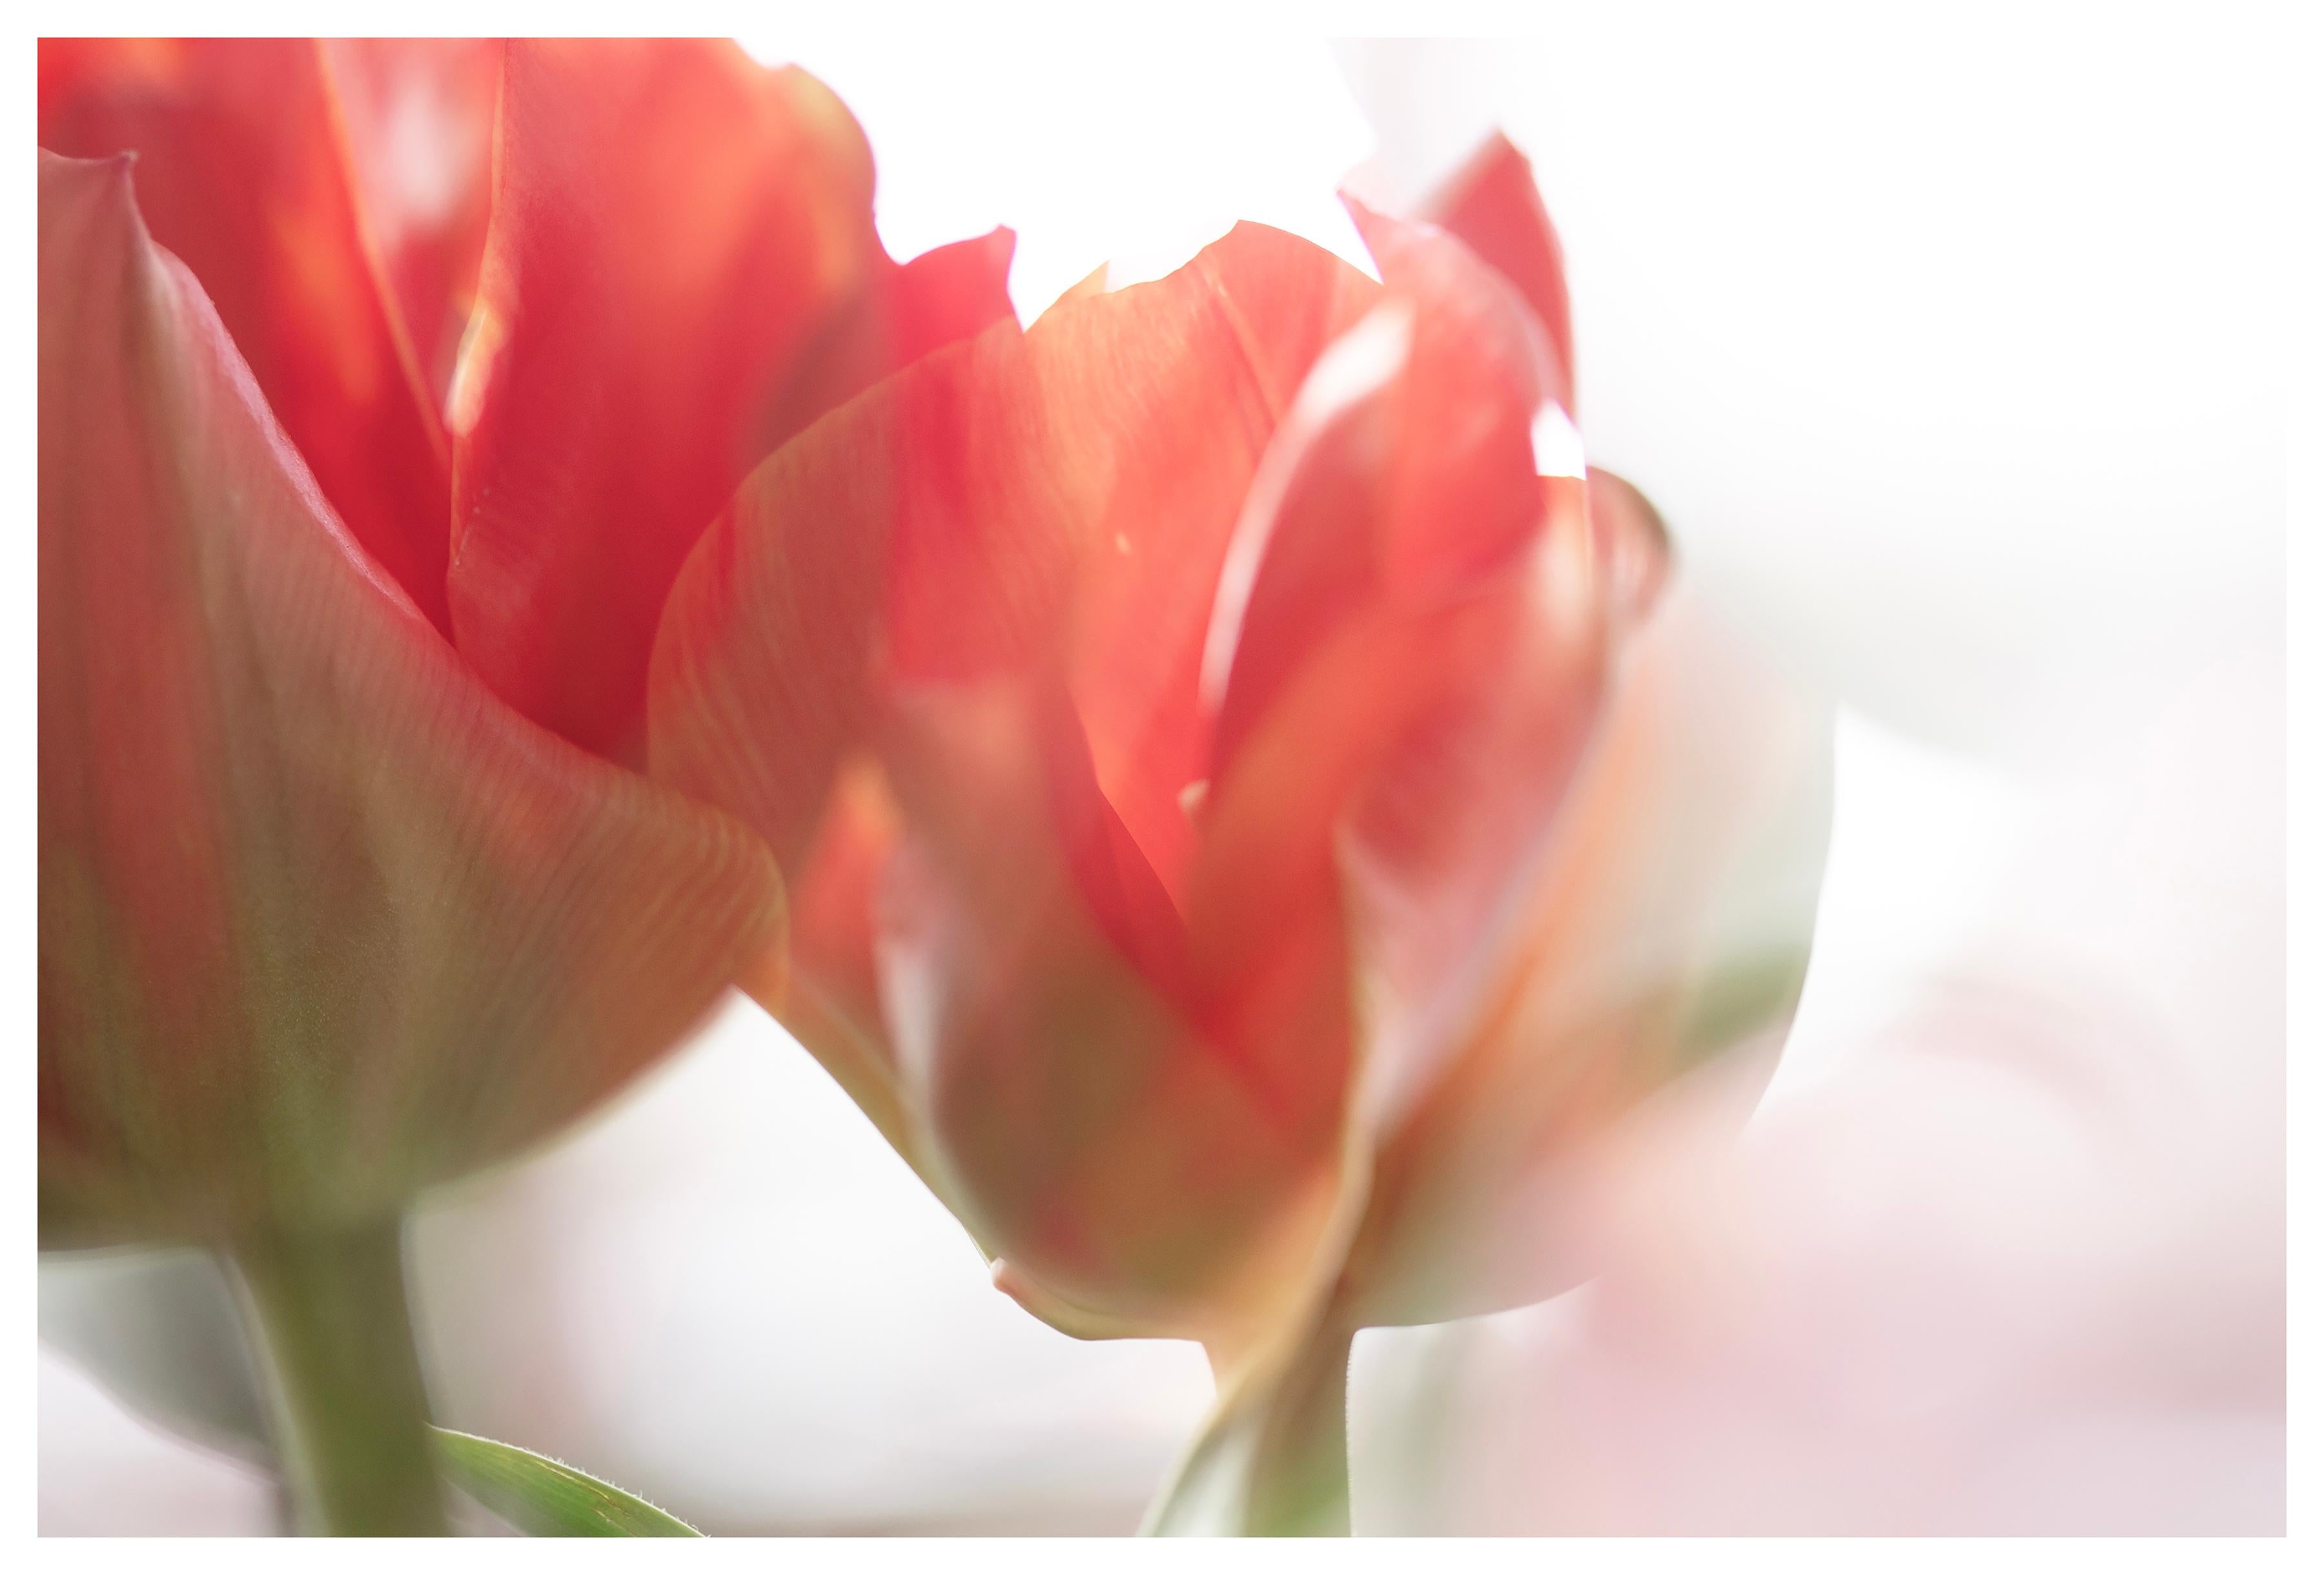 „Sunday's Tulips (I)“ Großformatige Fotografie kräftige Blume pastellrot orangeweiß